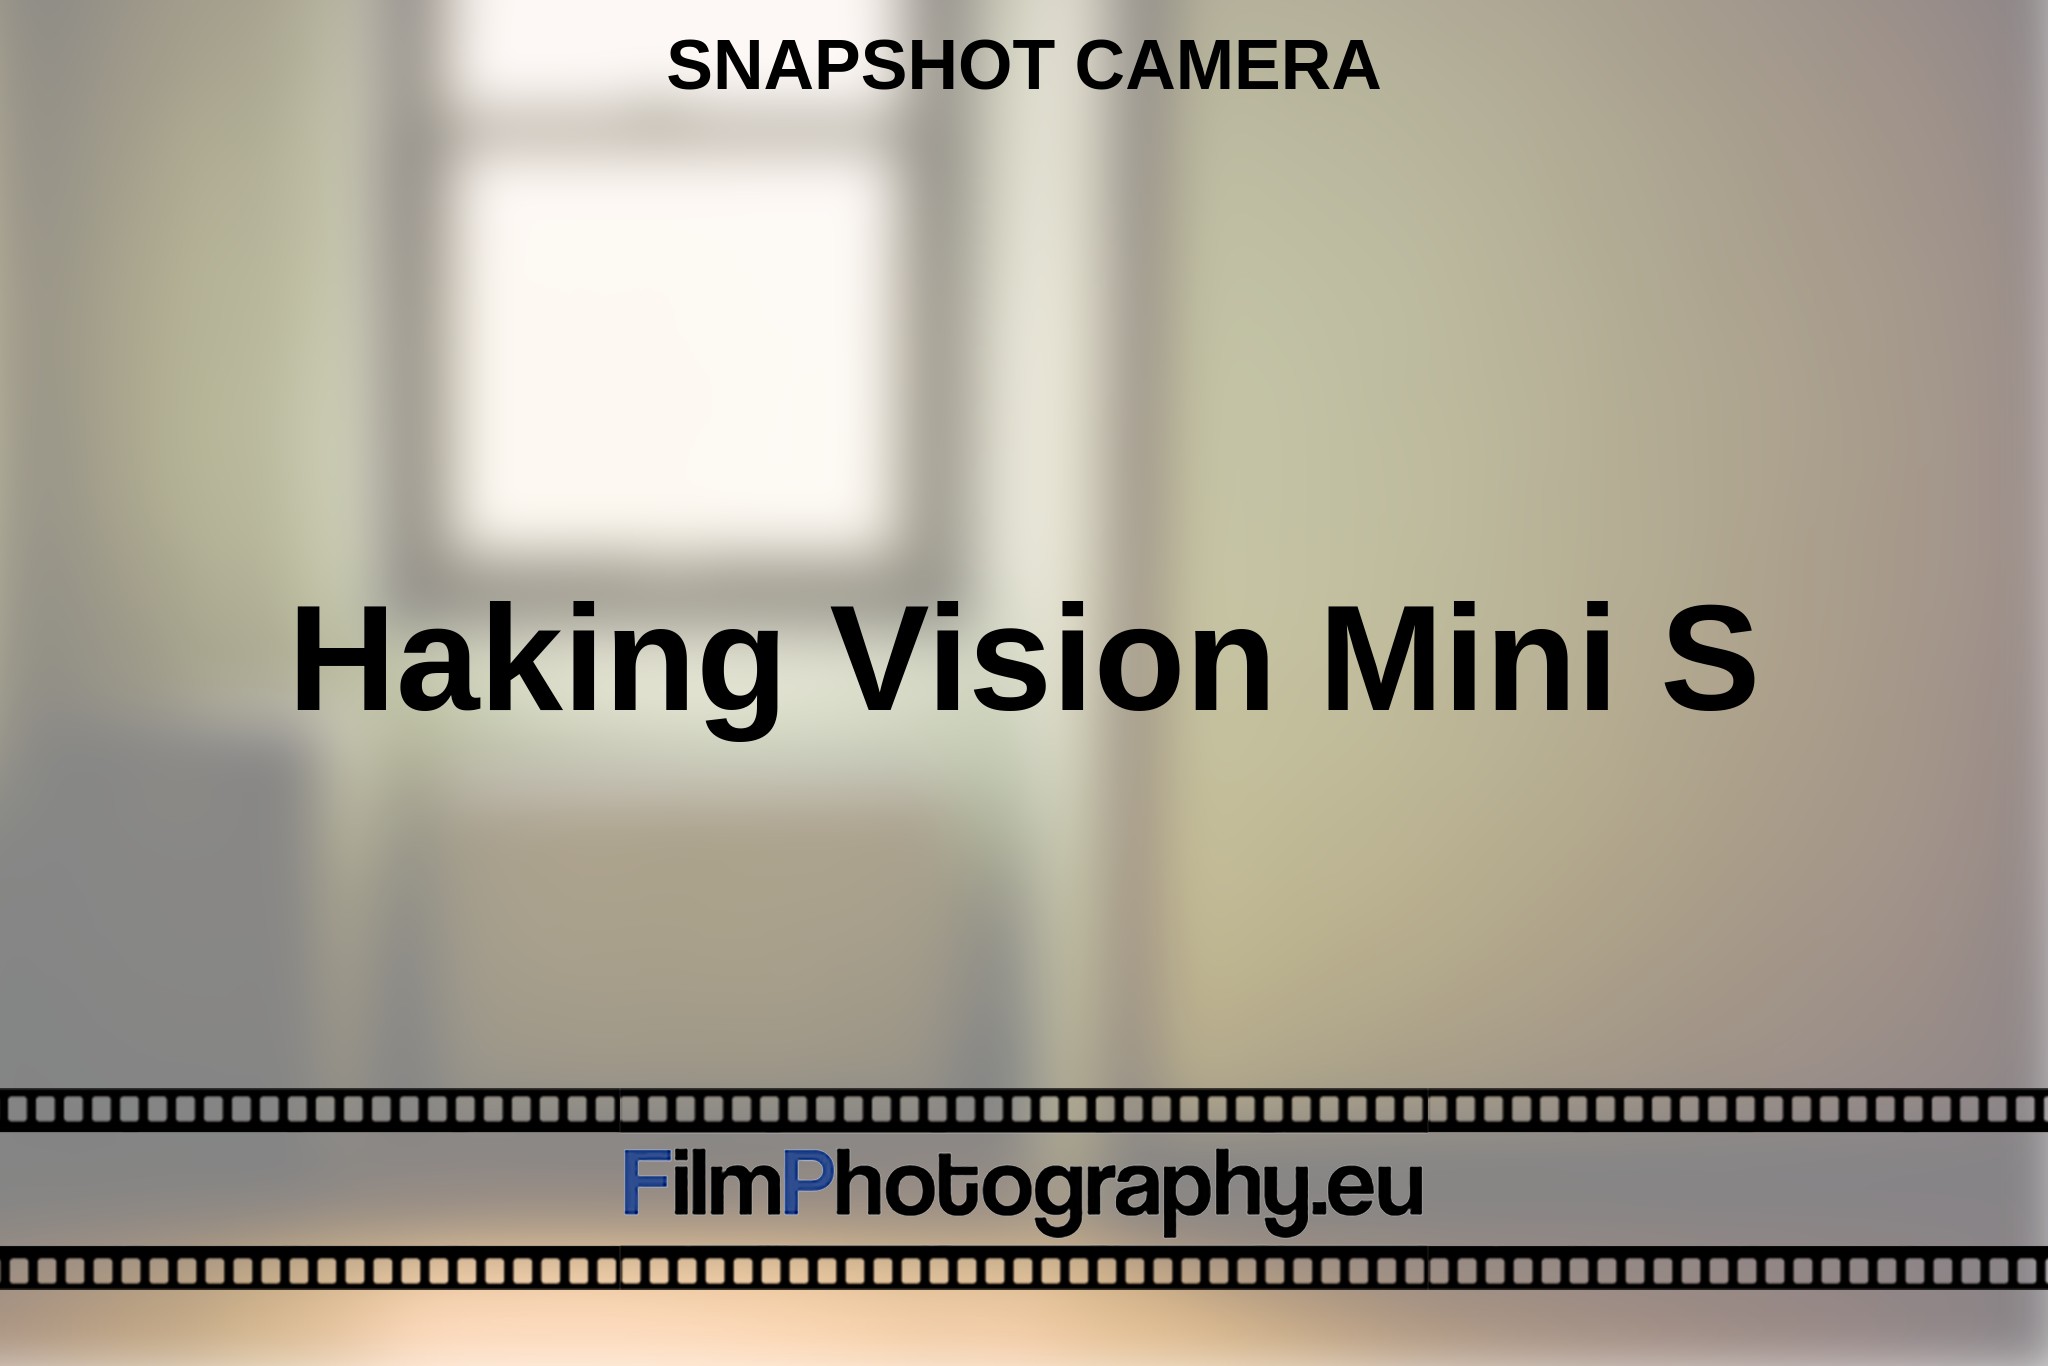 haking-vision-mini-s-snapshot-camera-en-bnv.jpg